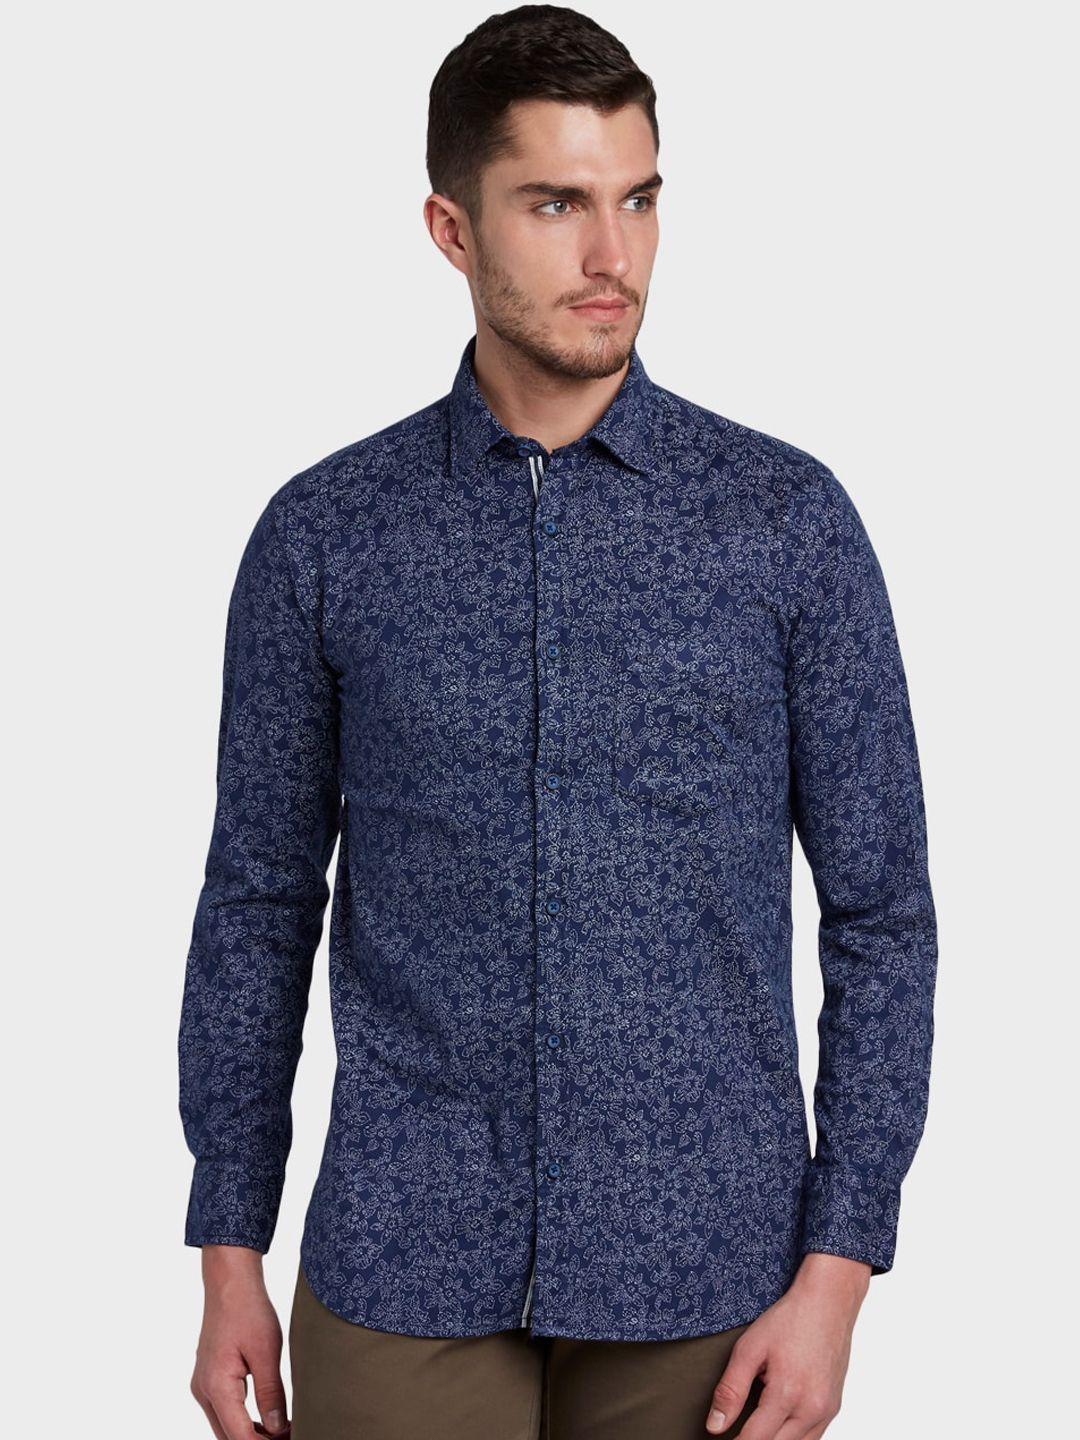 colorplus-men-navy-blue-&-white-regular-fit-printed-casual-shirt